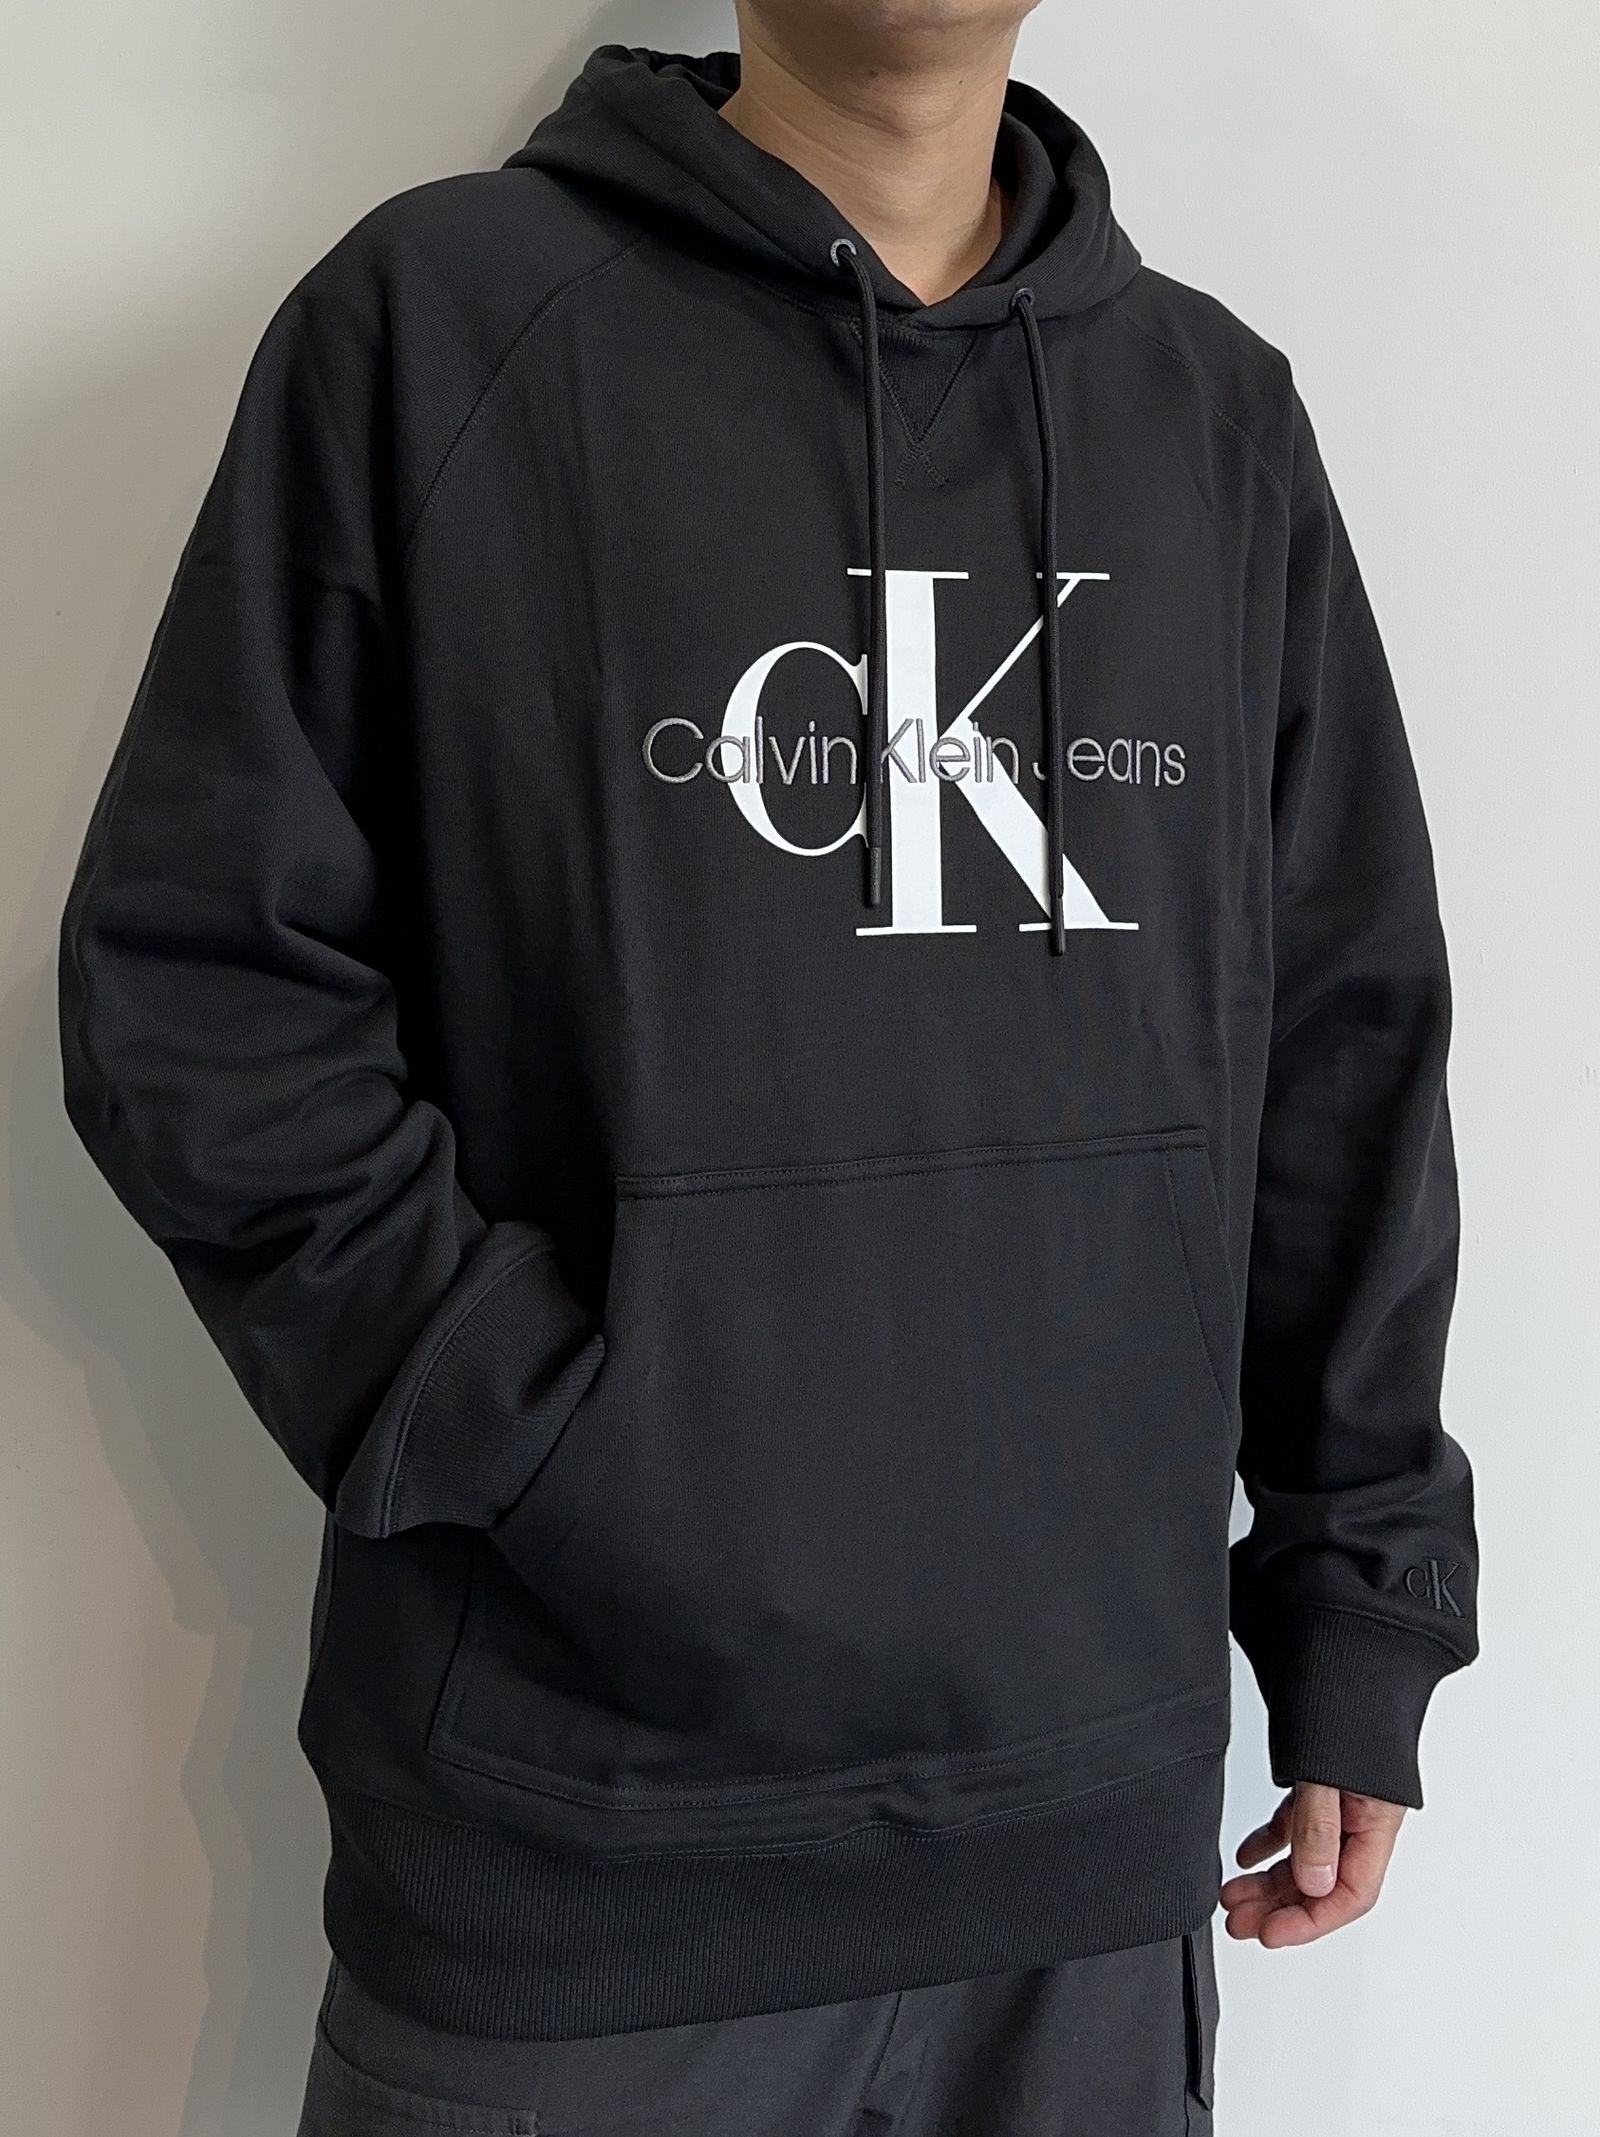 Calvin Klein - リラックス モノロゴパーカー / J325245 / ブラック | LUKE